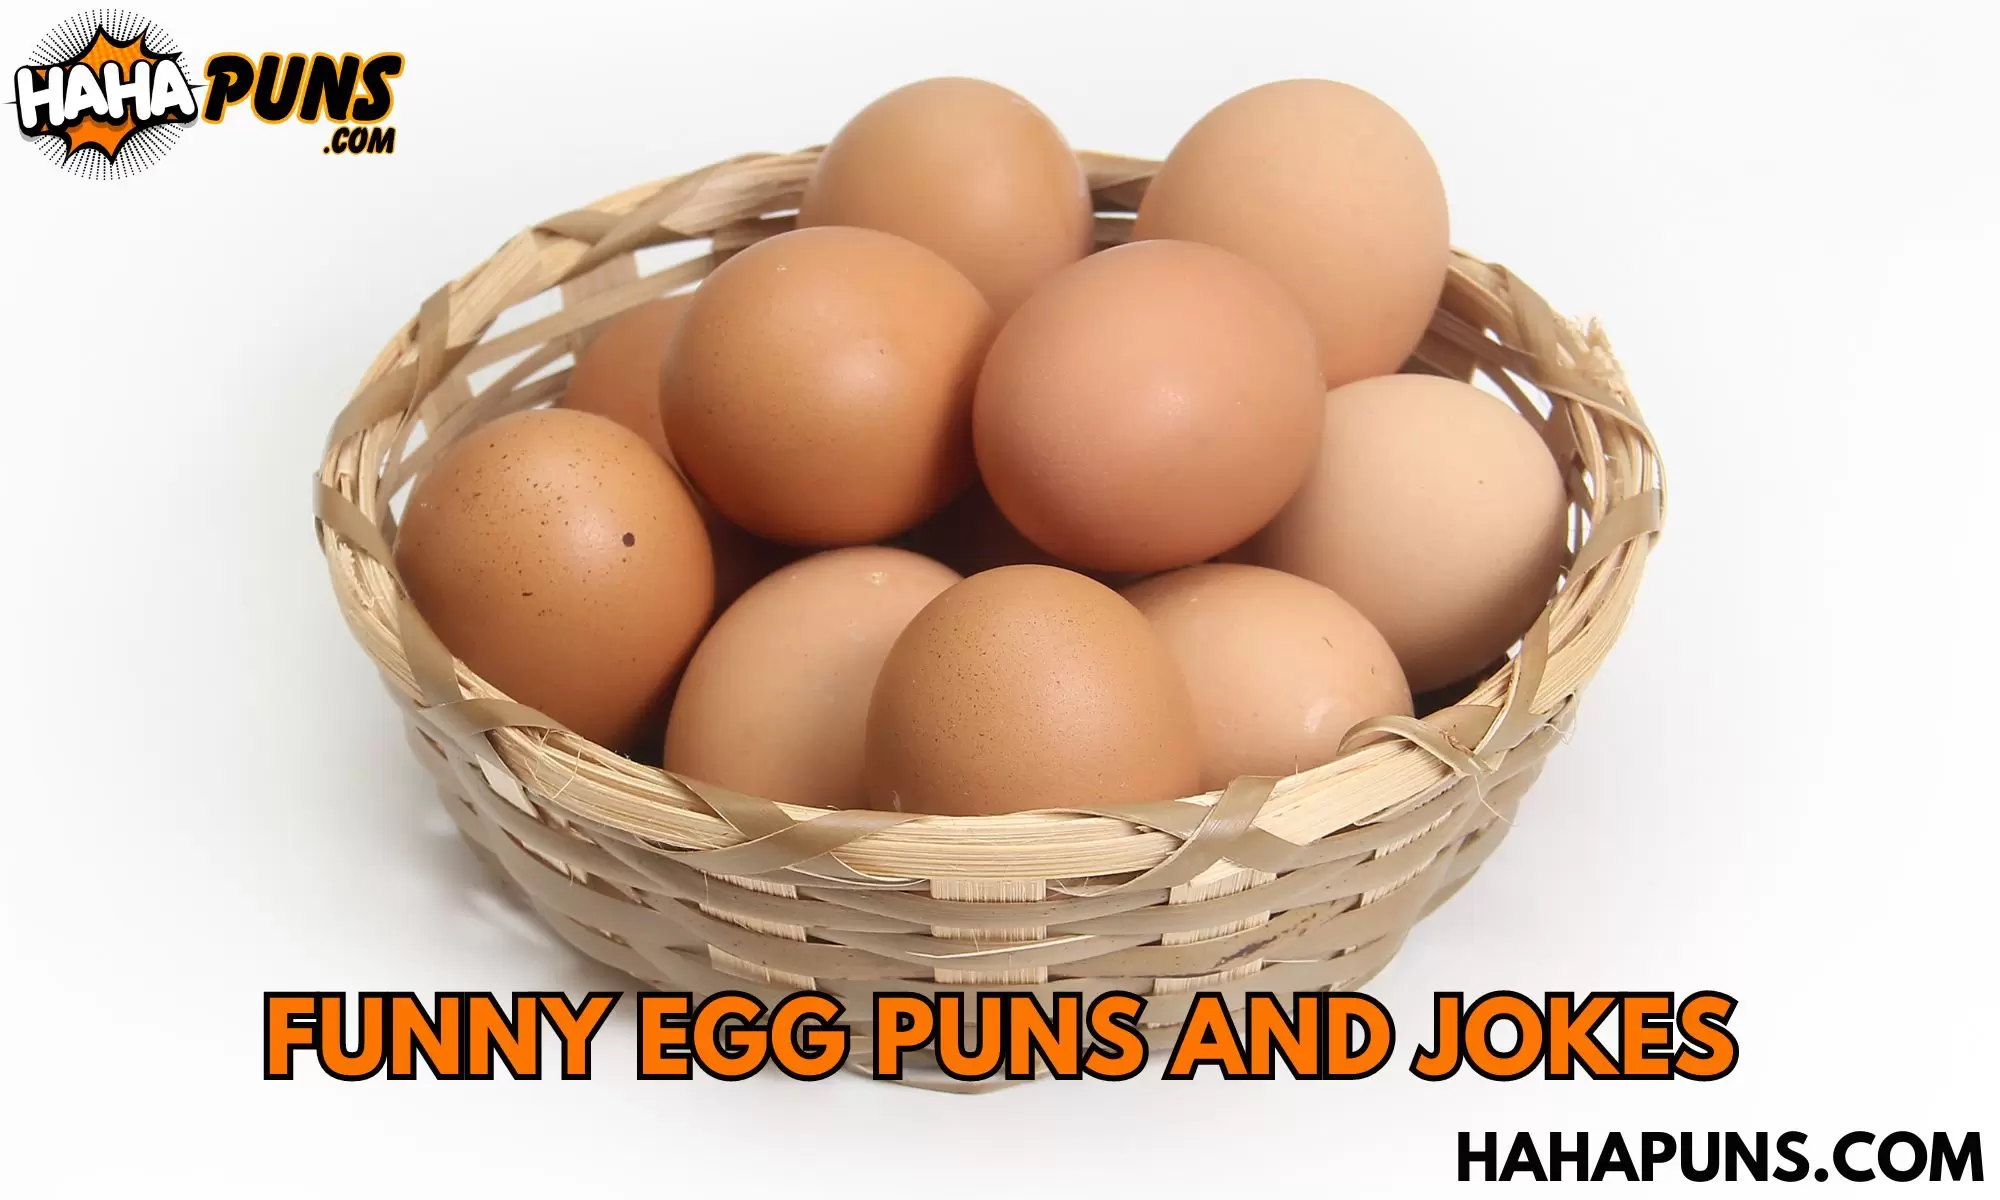 Funny Egg Puns and Jokes